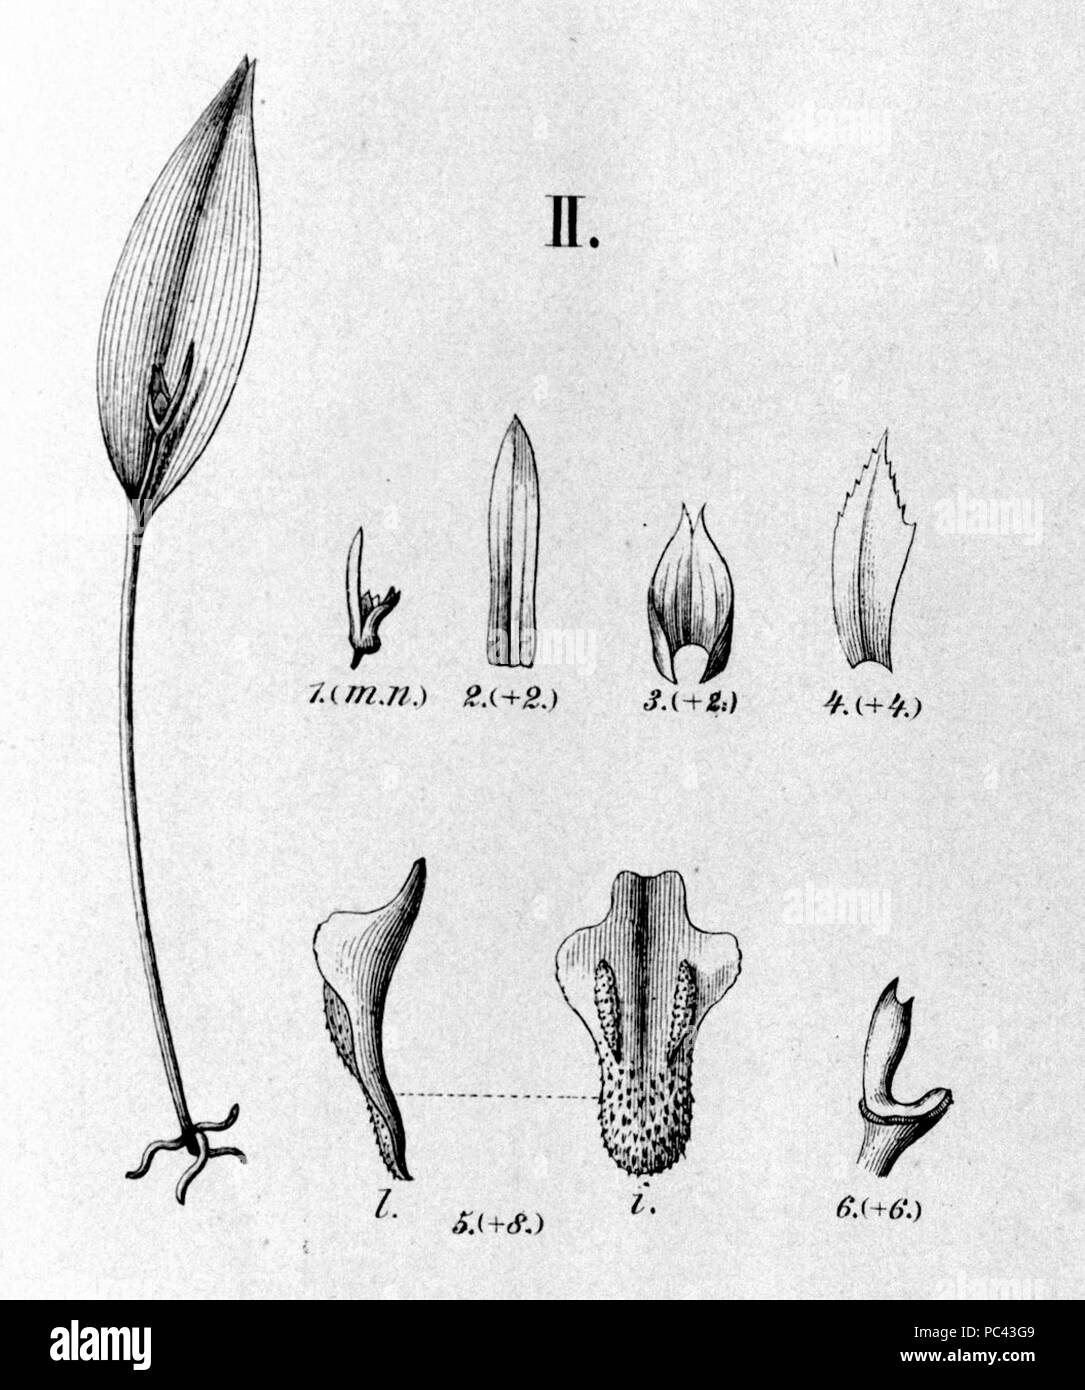 25 Acianthera miqueliana (come Pleurothallis longisepala) - intaglio da Fl.br.3-4- 116 nicchie-figura II Foto Stock